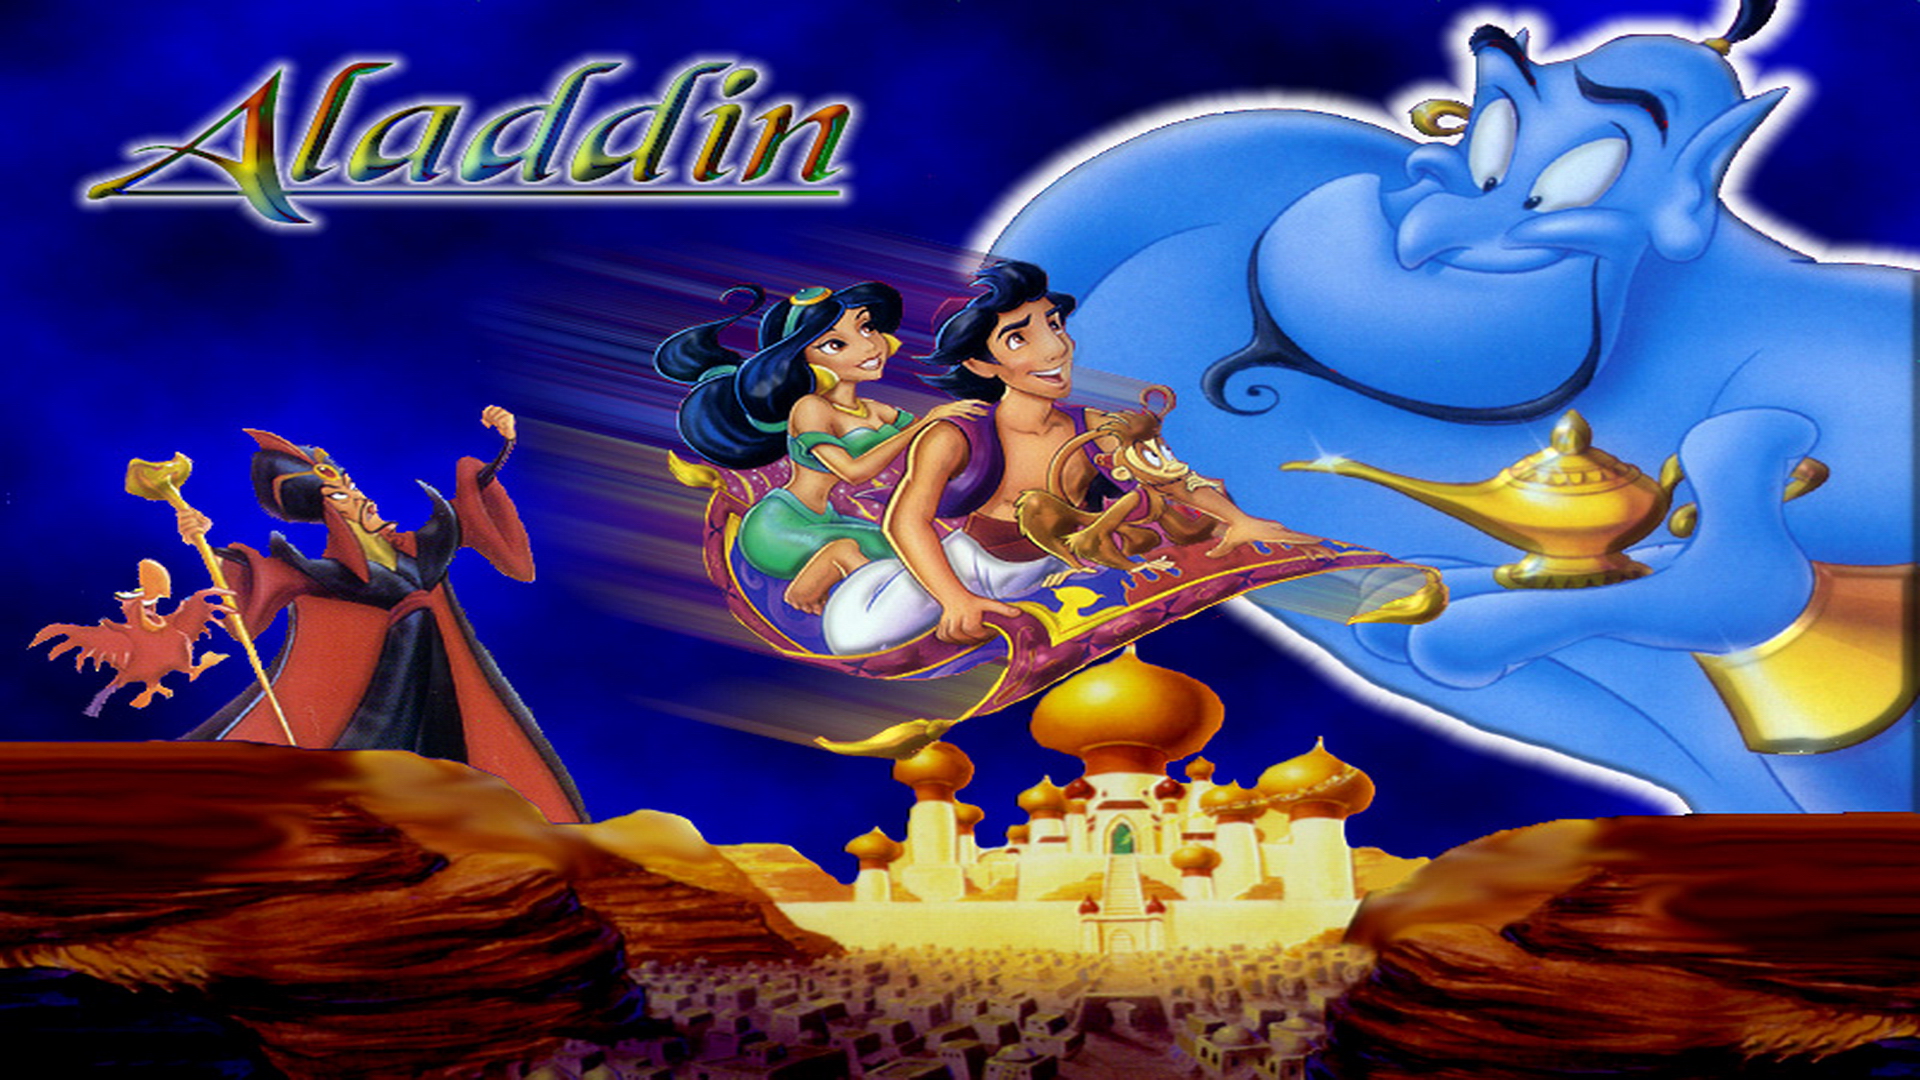 Aladdins magic lamp 8K wallpaper download